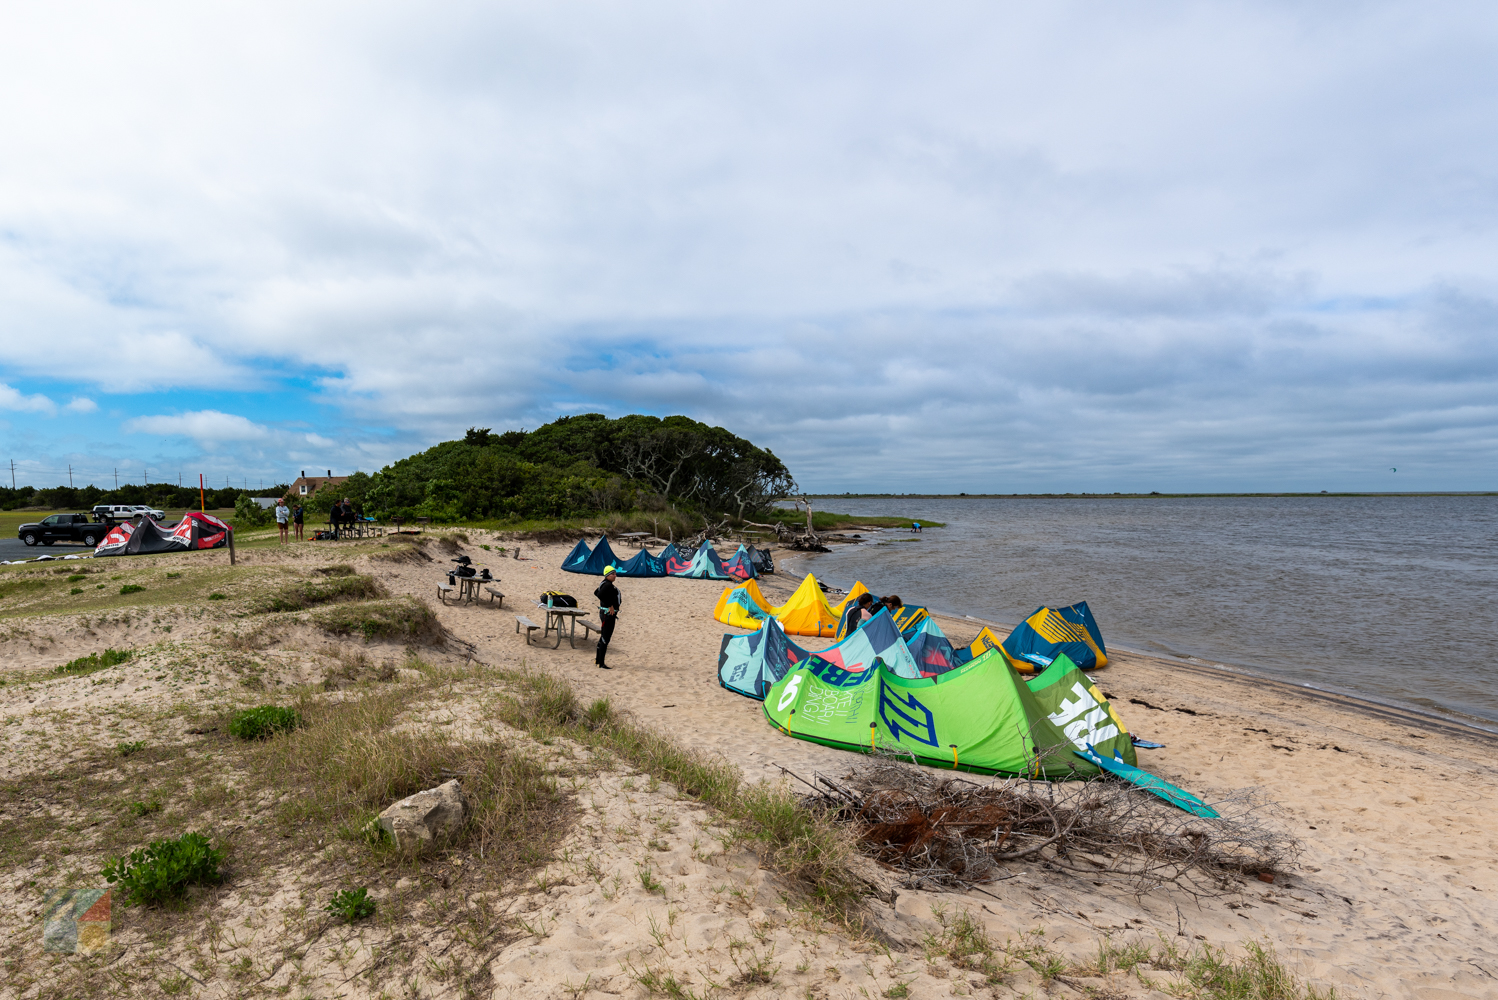 Kite Surfing equipment on a soundside beach in Salvo